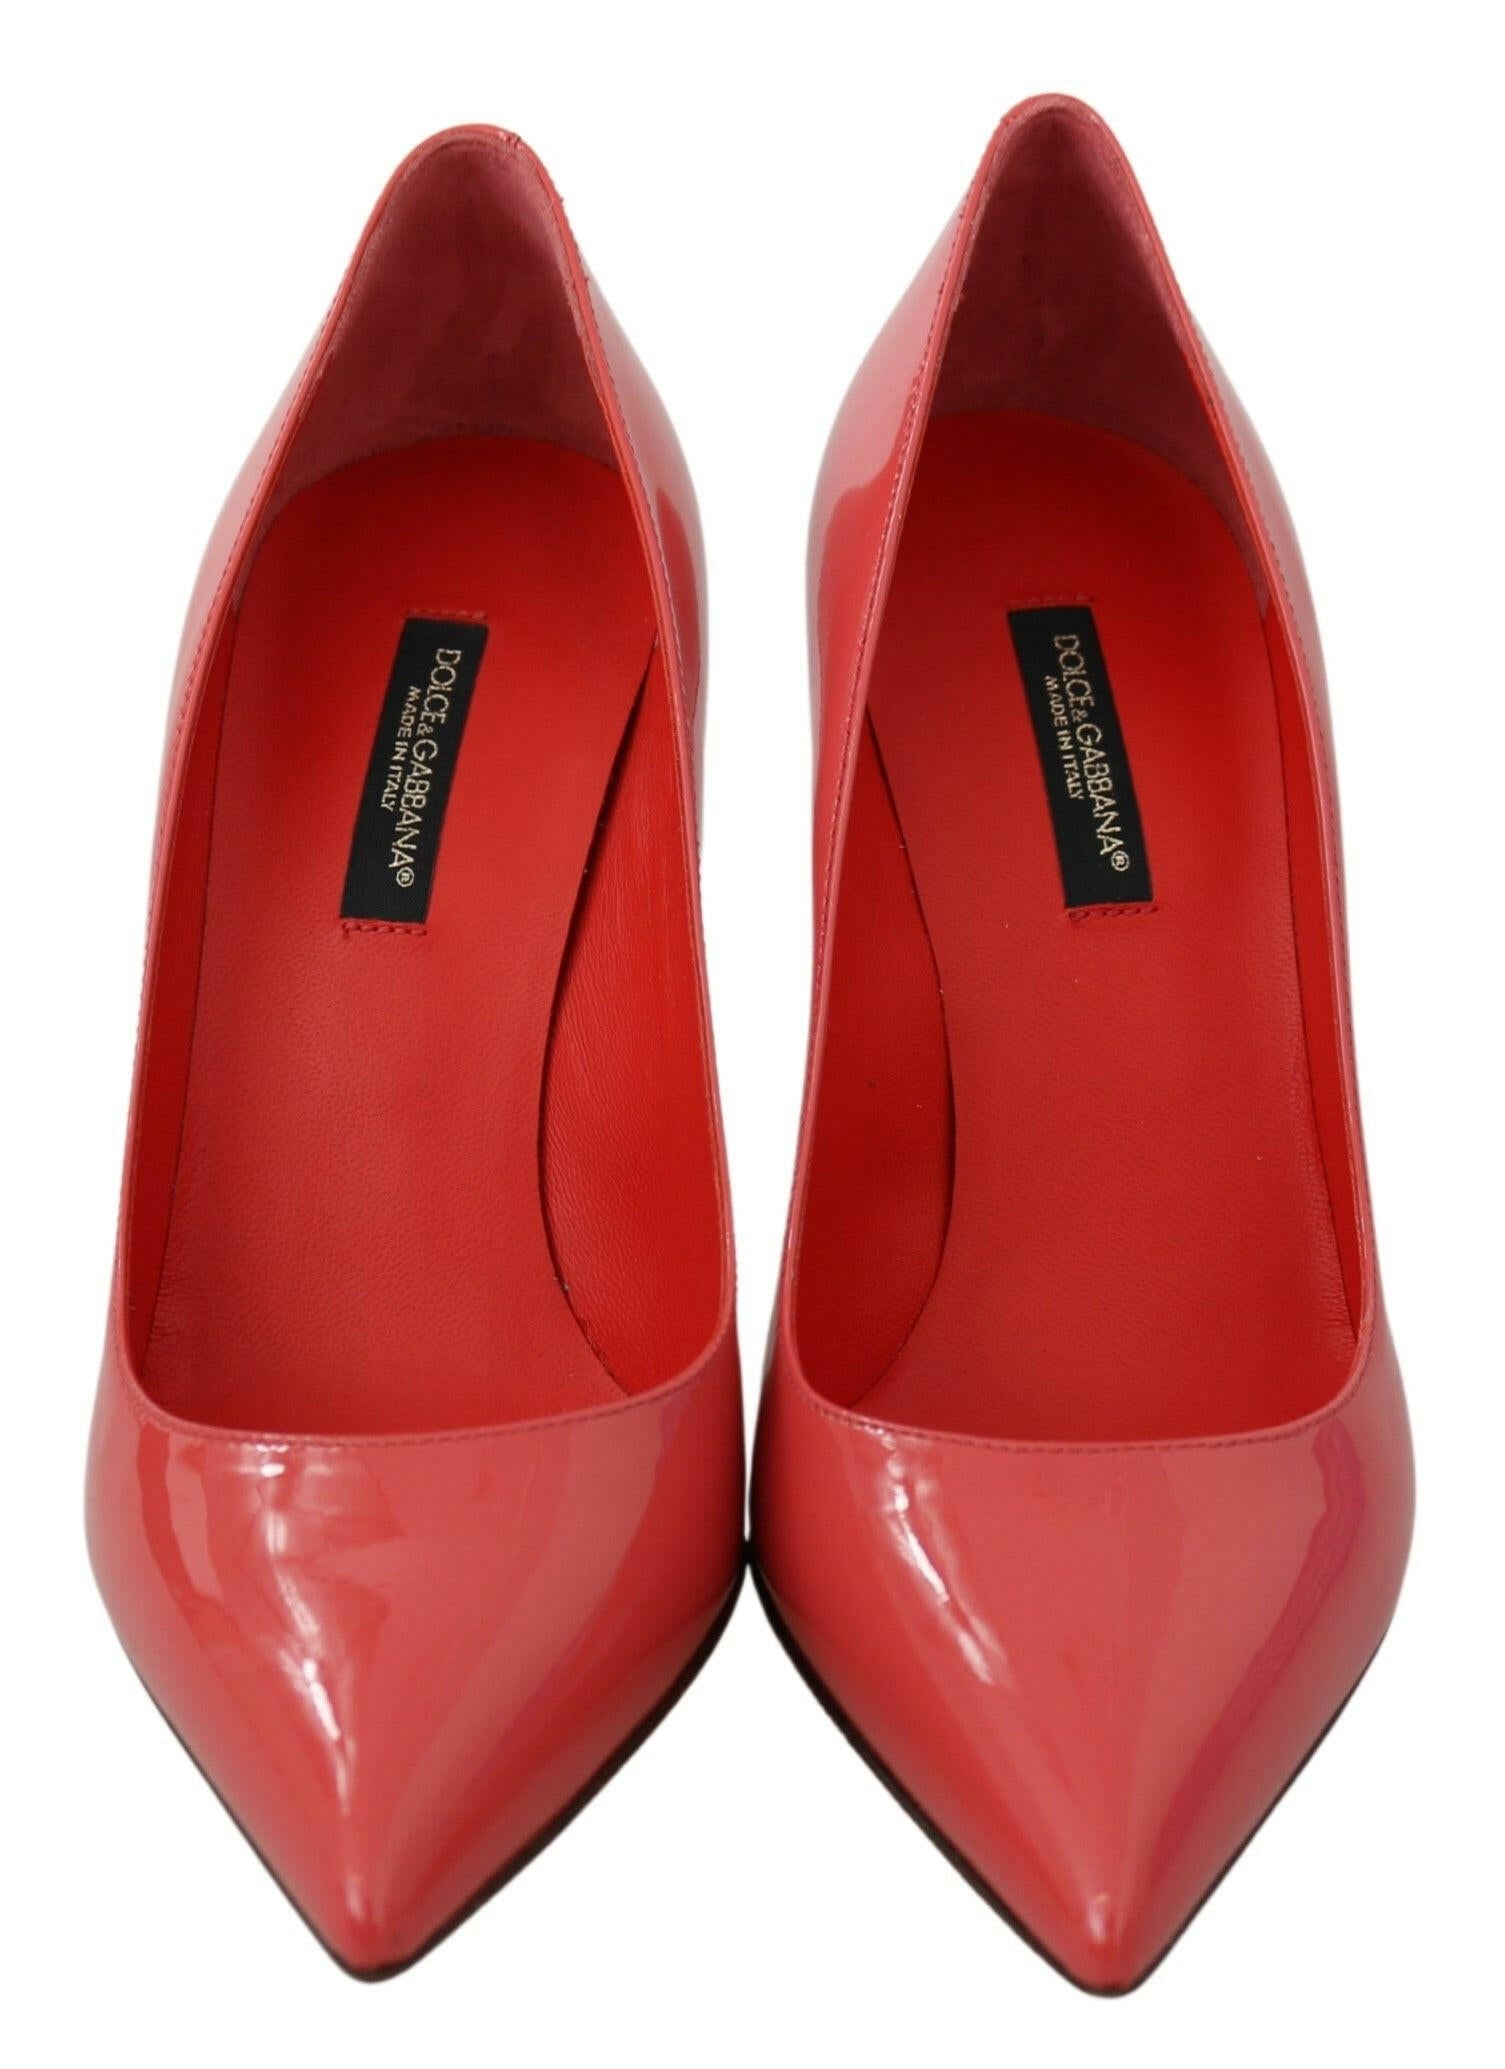 Dolce & Gabbana Dark Pink Patent Leather Heels Pumps - GENUINE AUTHENTIC BRAND LLC  